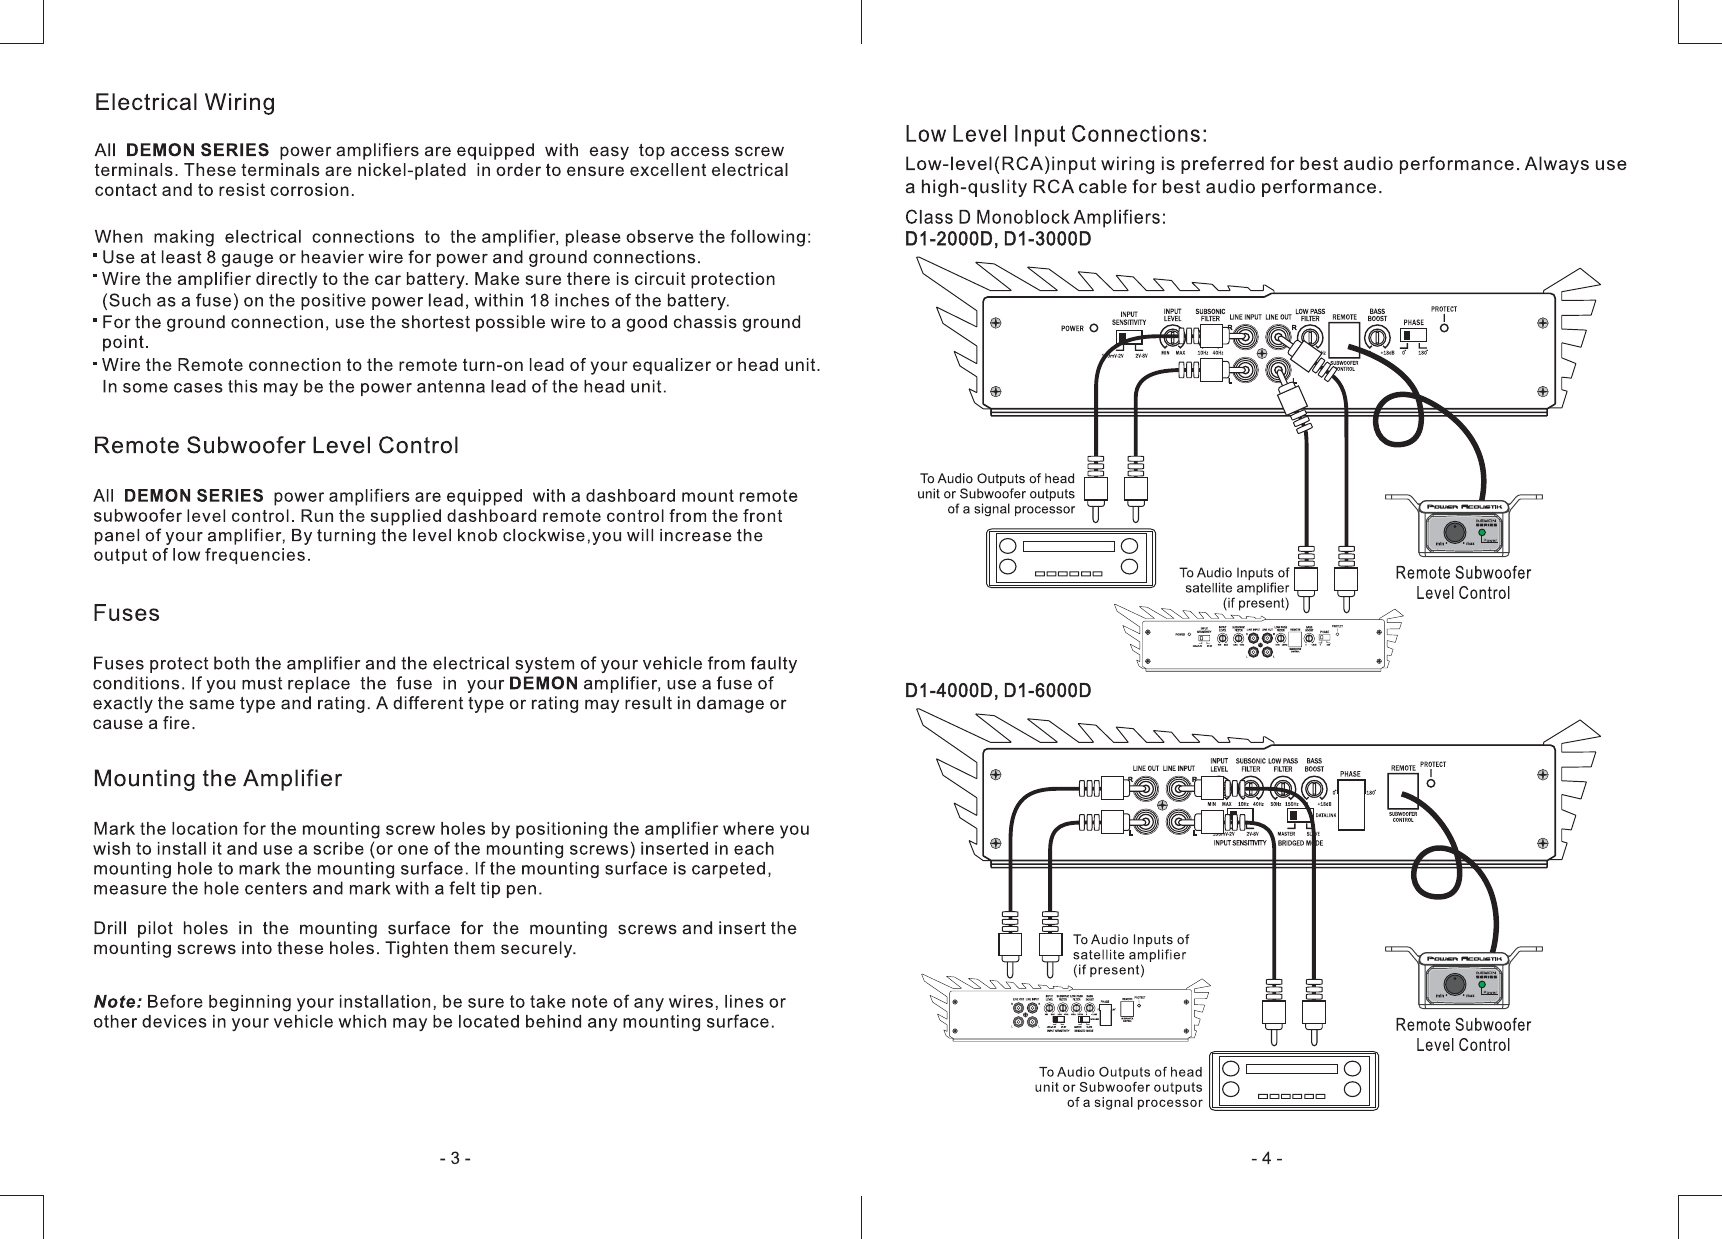 Power Acoustik Electronics Car Amplifier Class D Monoblock Users Manual  Power Acoustik Wiring Diagram    UserManual.wiki